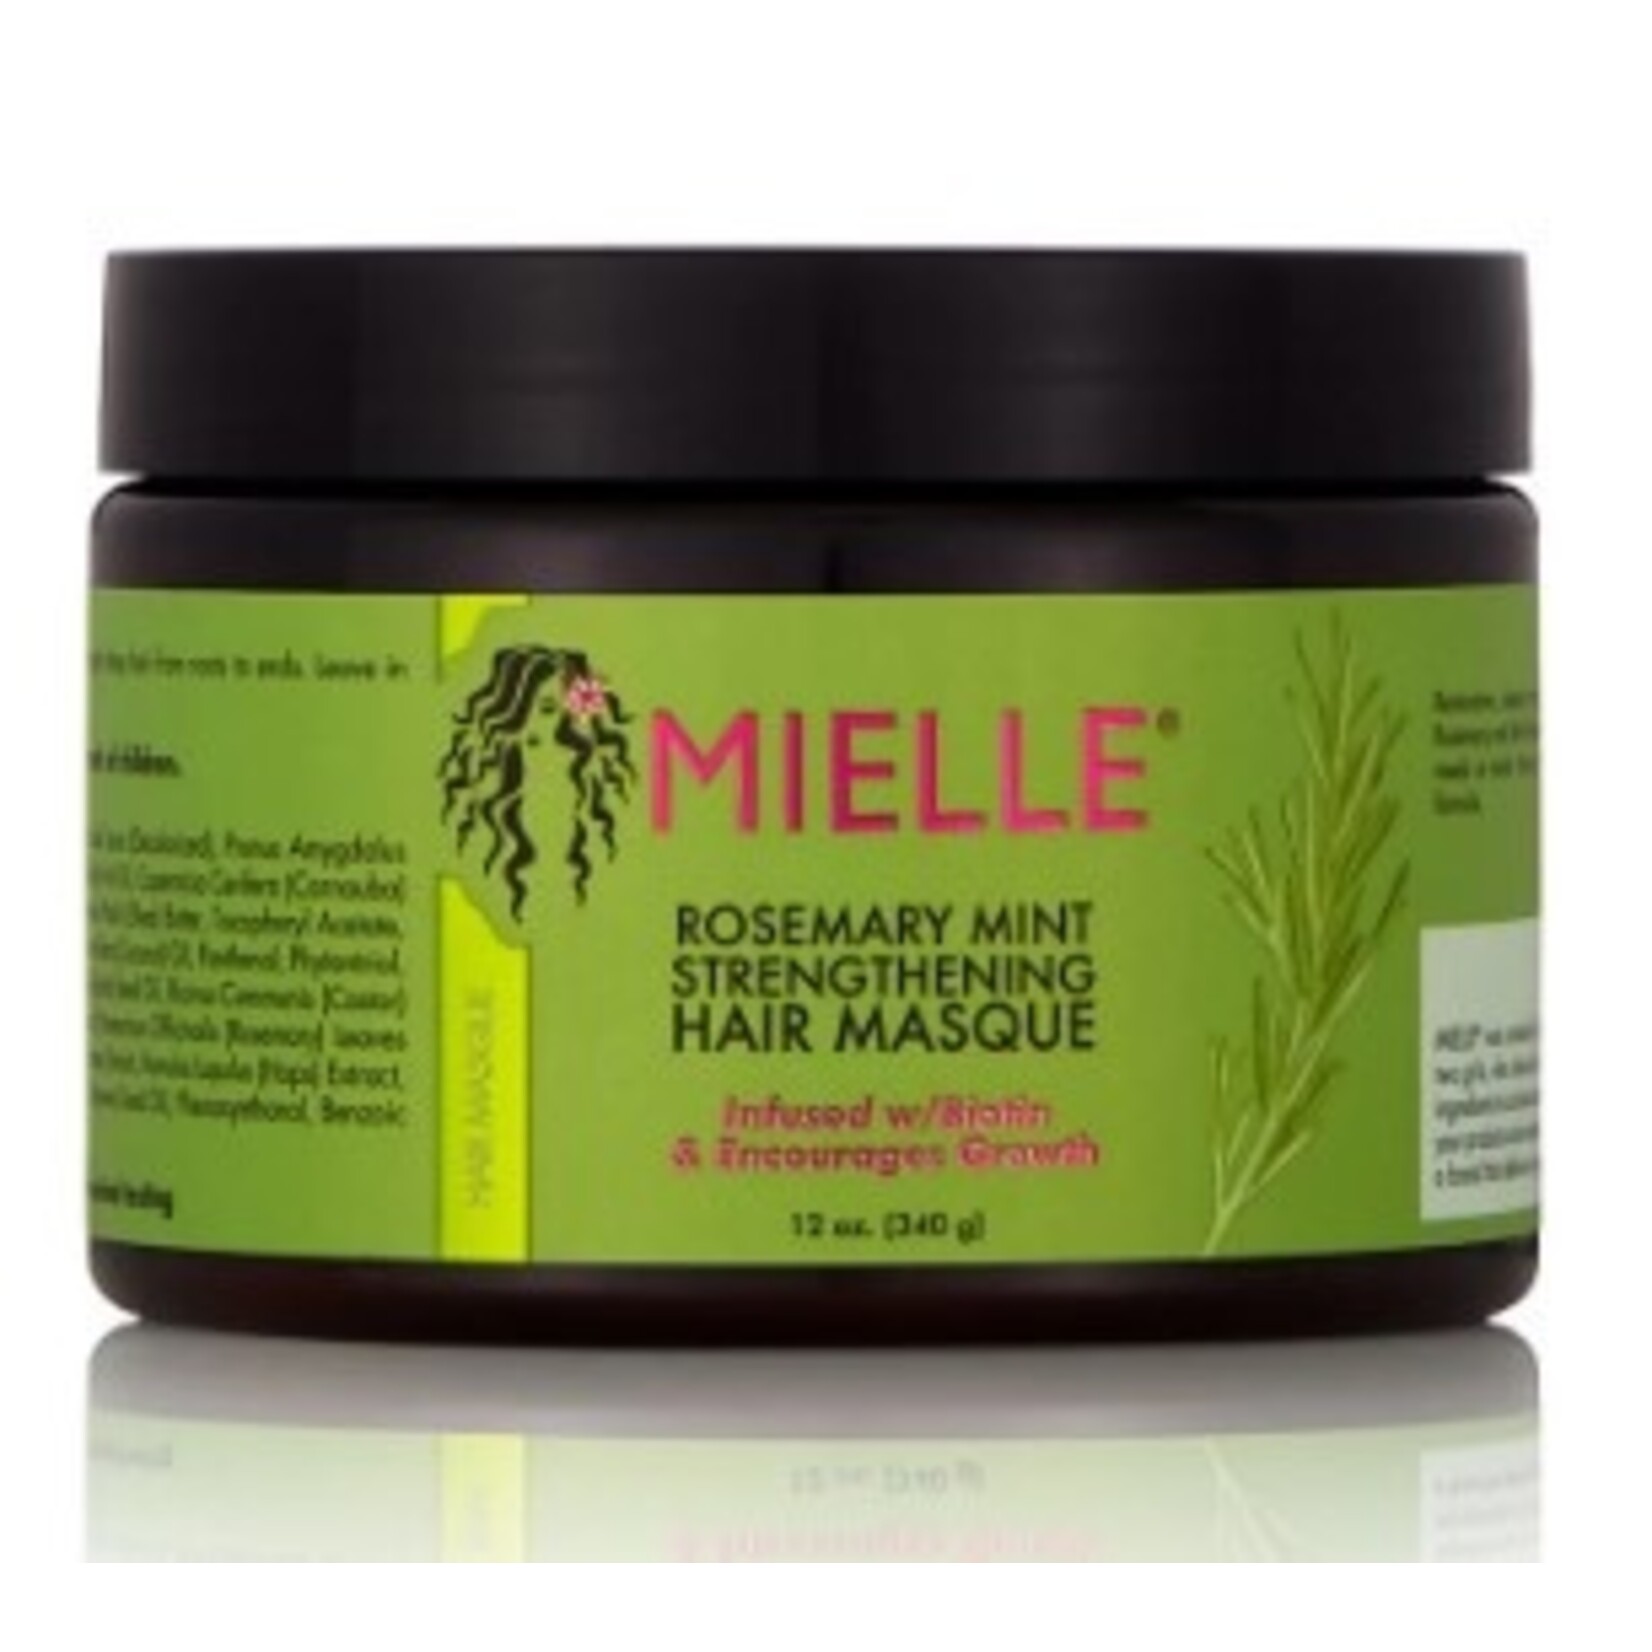 Mielle Mielle Rosemary Mint Strengthening Hair Masque - 12 oz